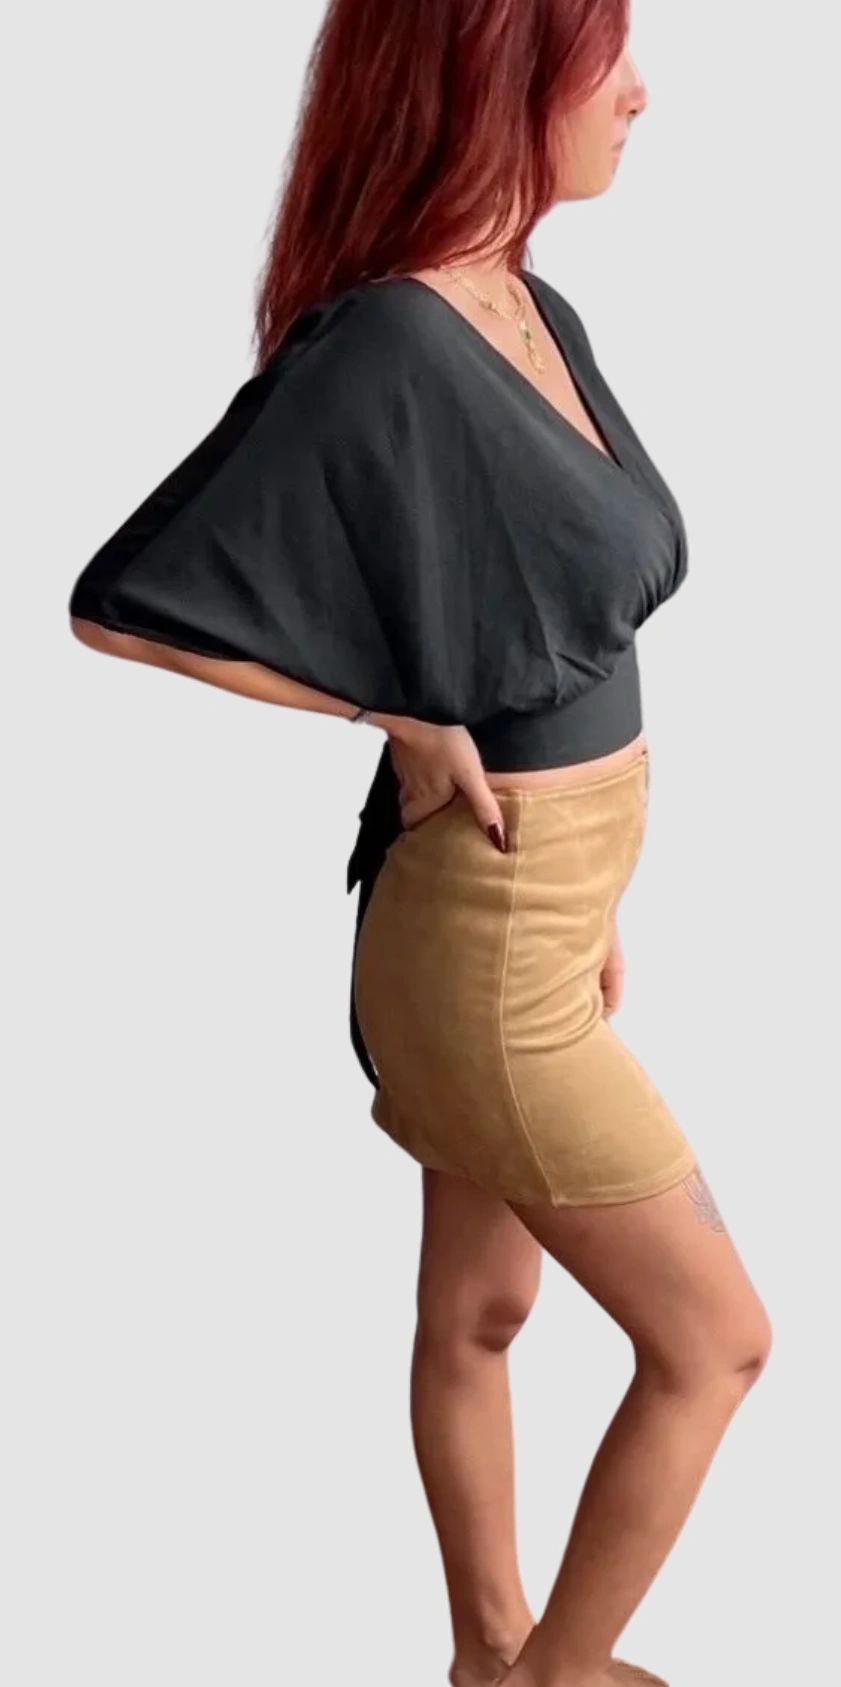 The Carissa Faux Suede Front Zip Mini Skirt